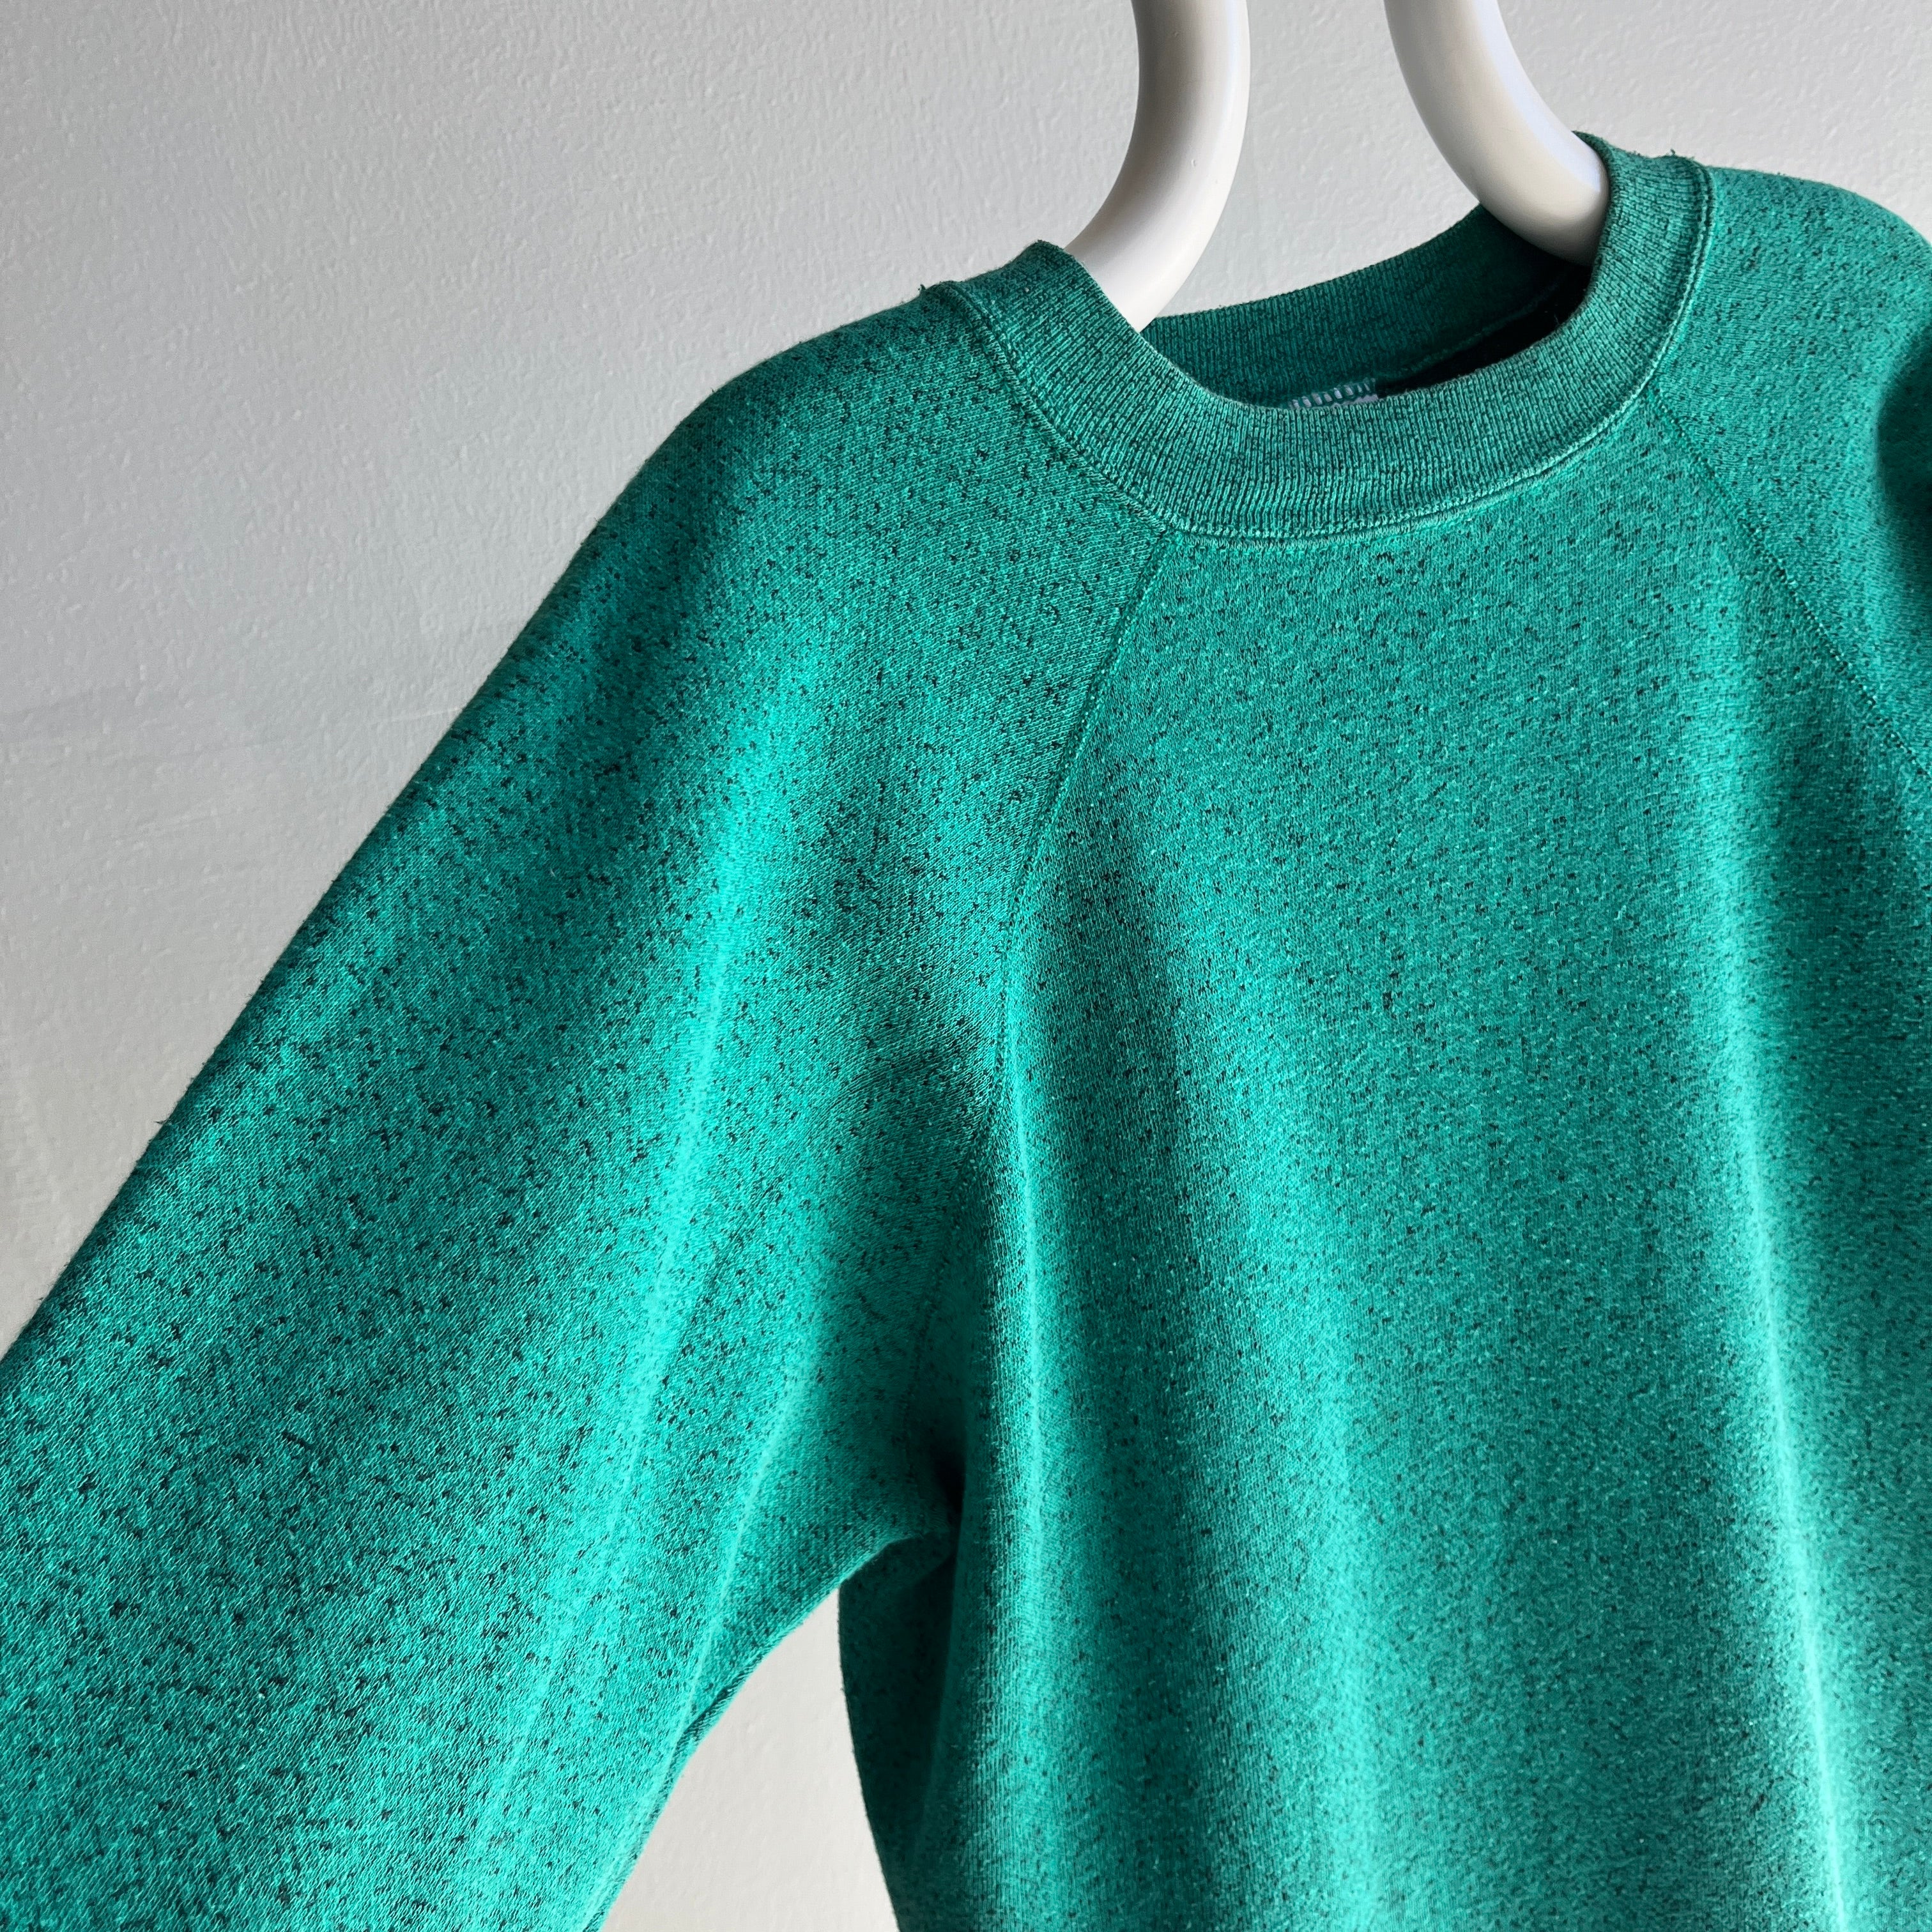 1980s Mint N Chip Sweatshirt Dress - YES!